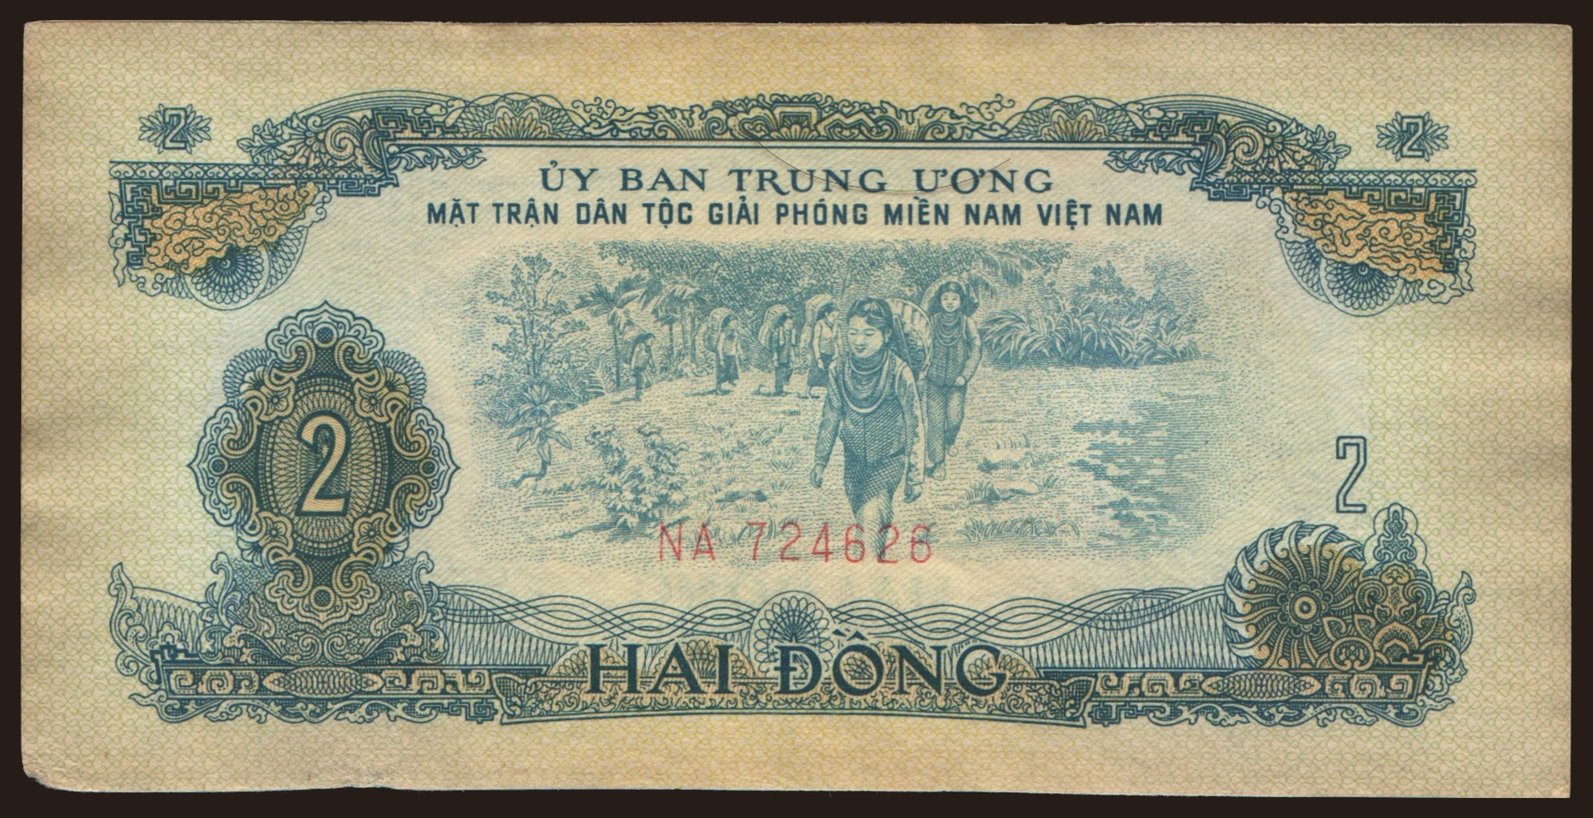 2 dong, 1963